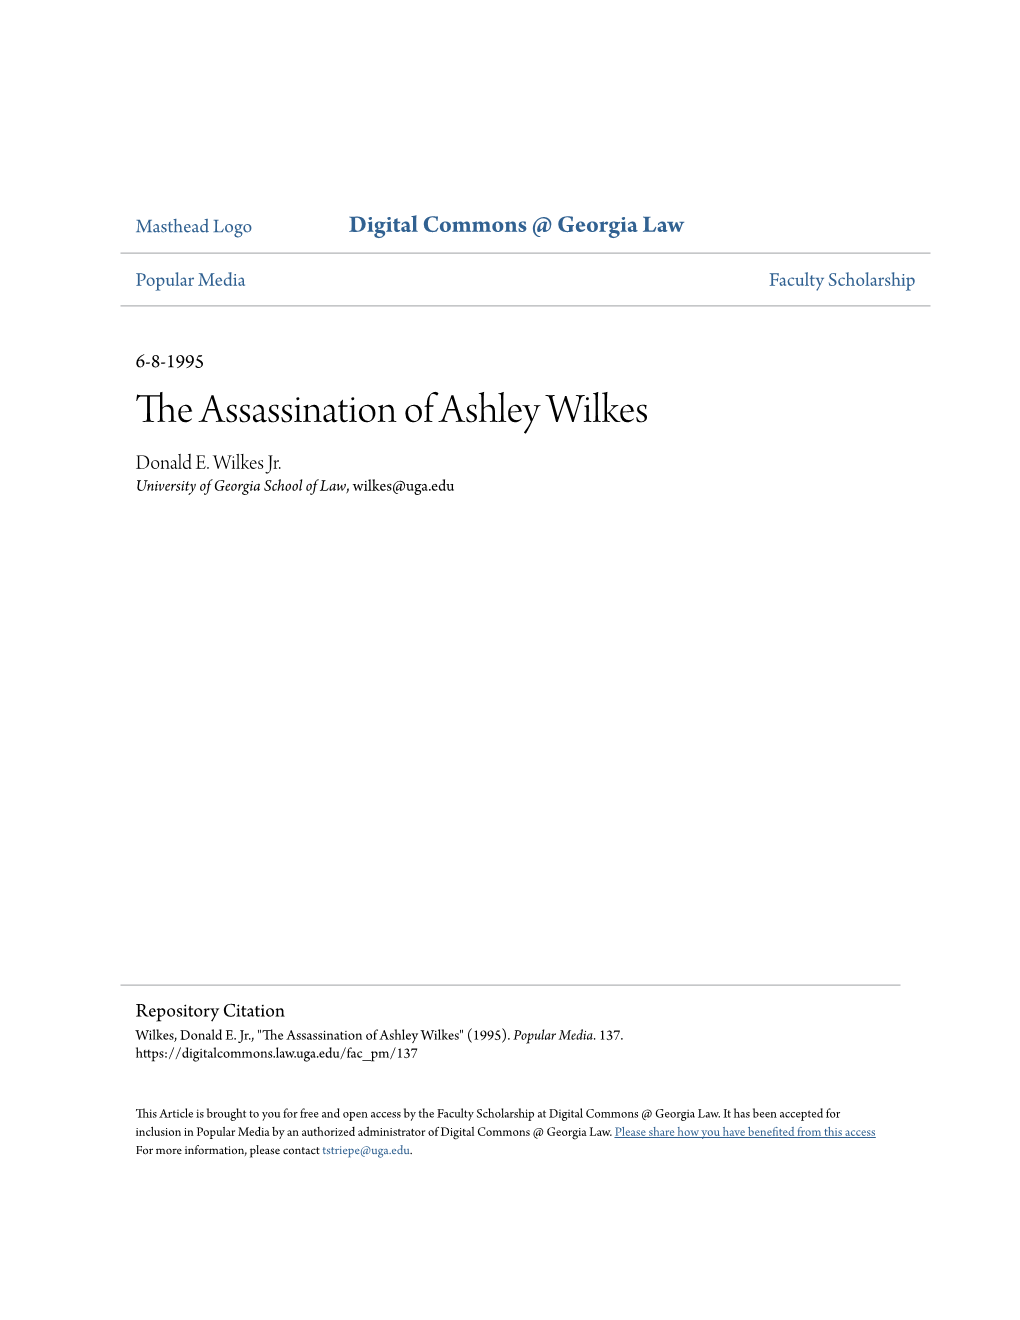 The Assassination of Ashley Wilkes Donald E